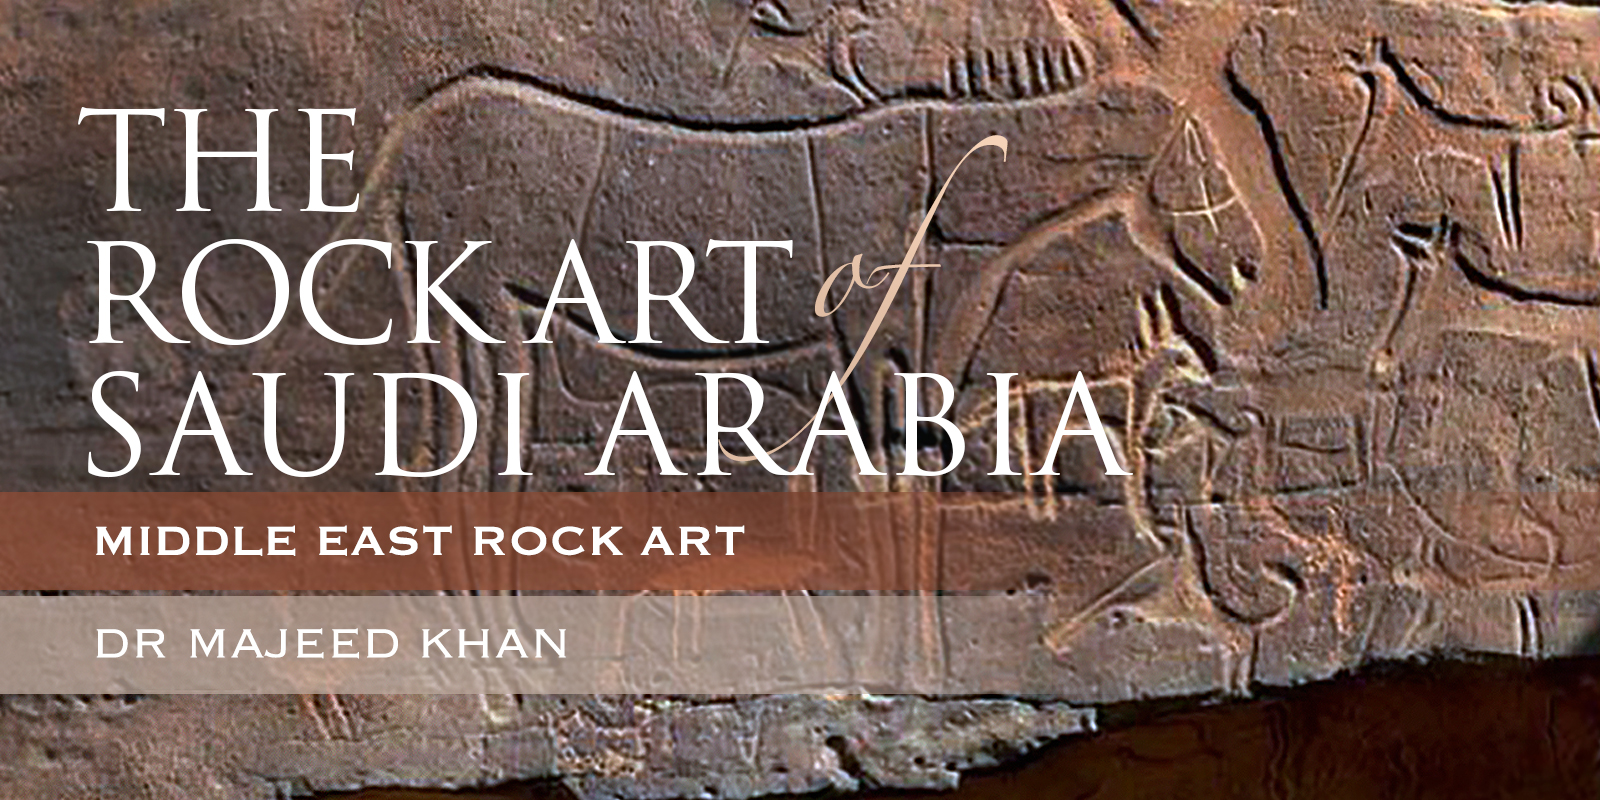 The Rock Art of Saudi Arabia Bradshaw Foundation